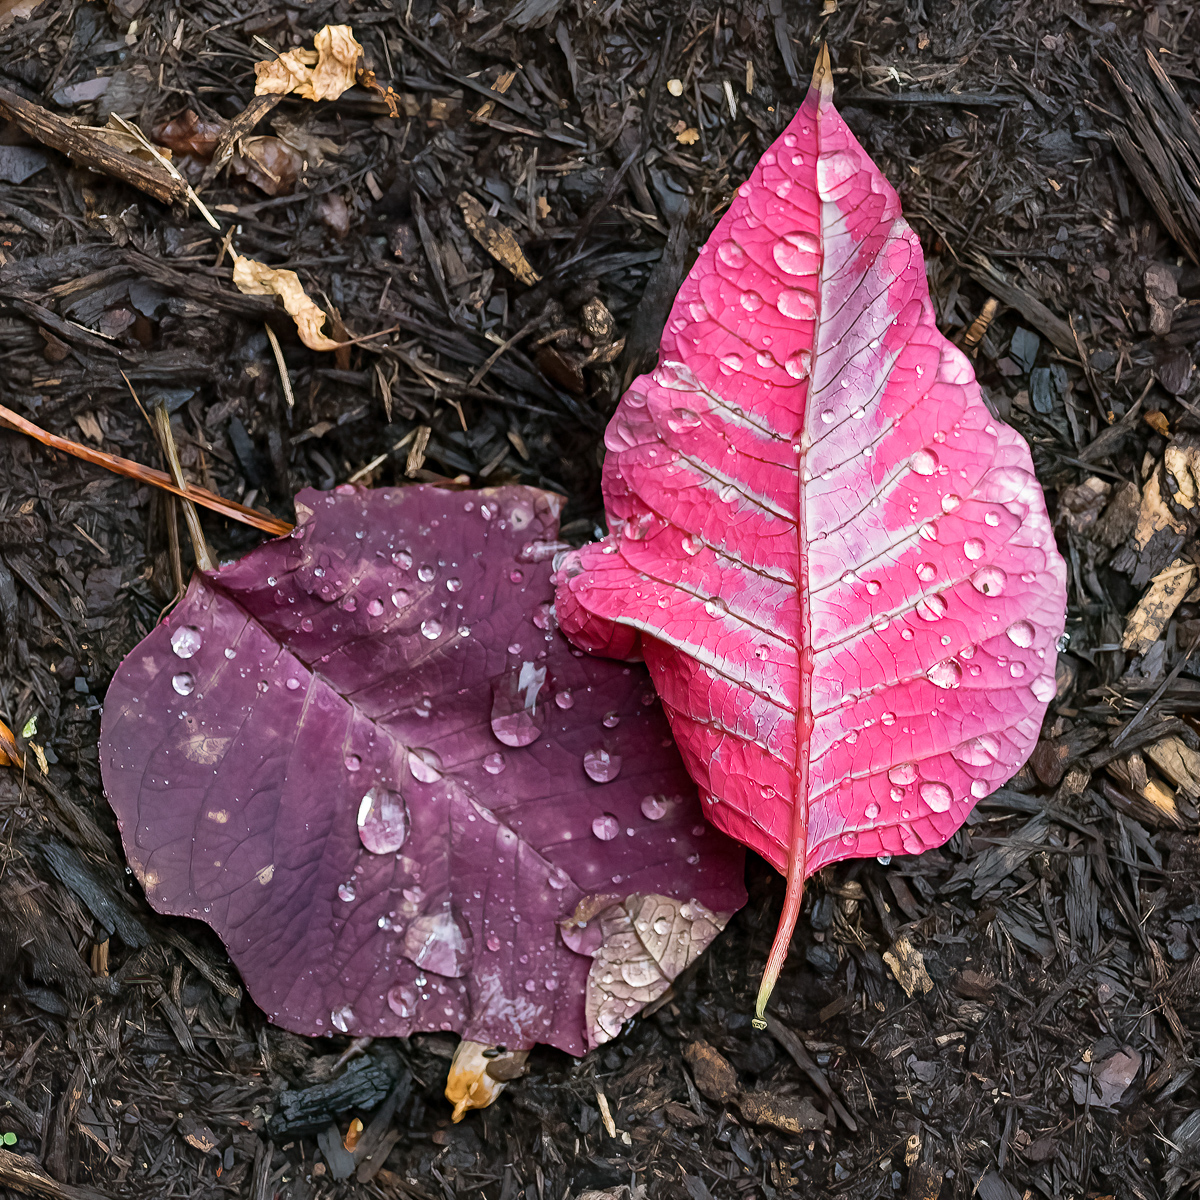 Fallen autumn leaves, Chapel Hill, North Carolina